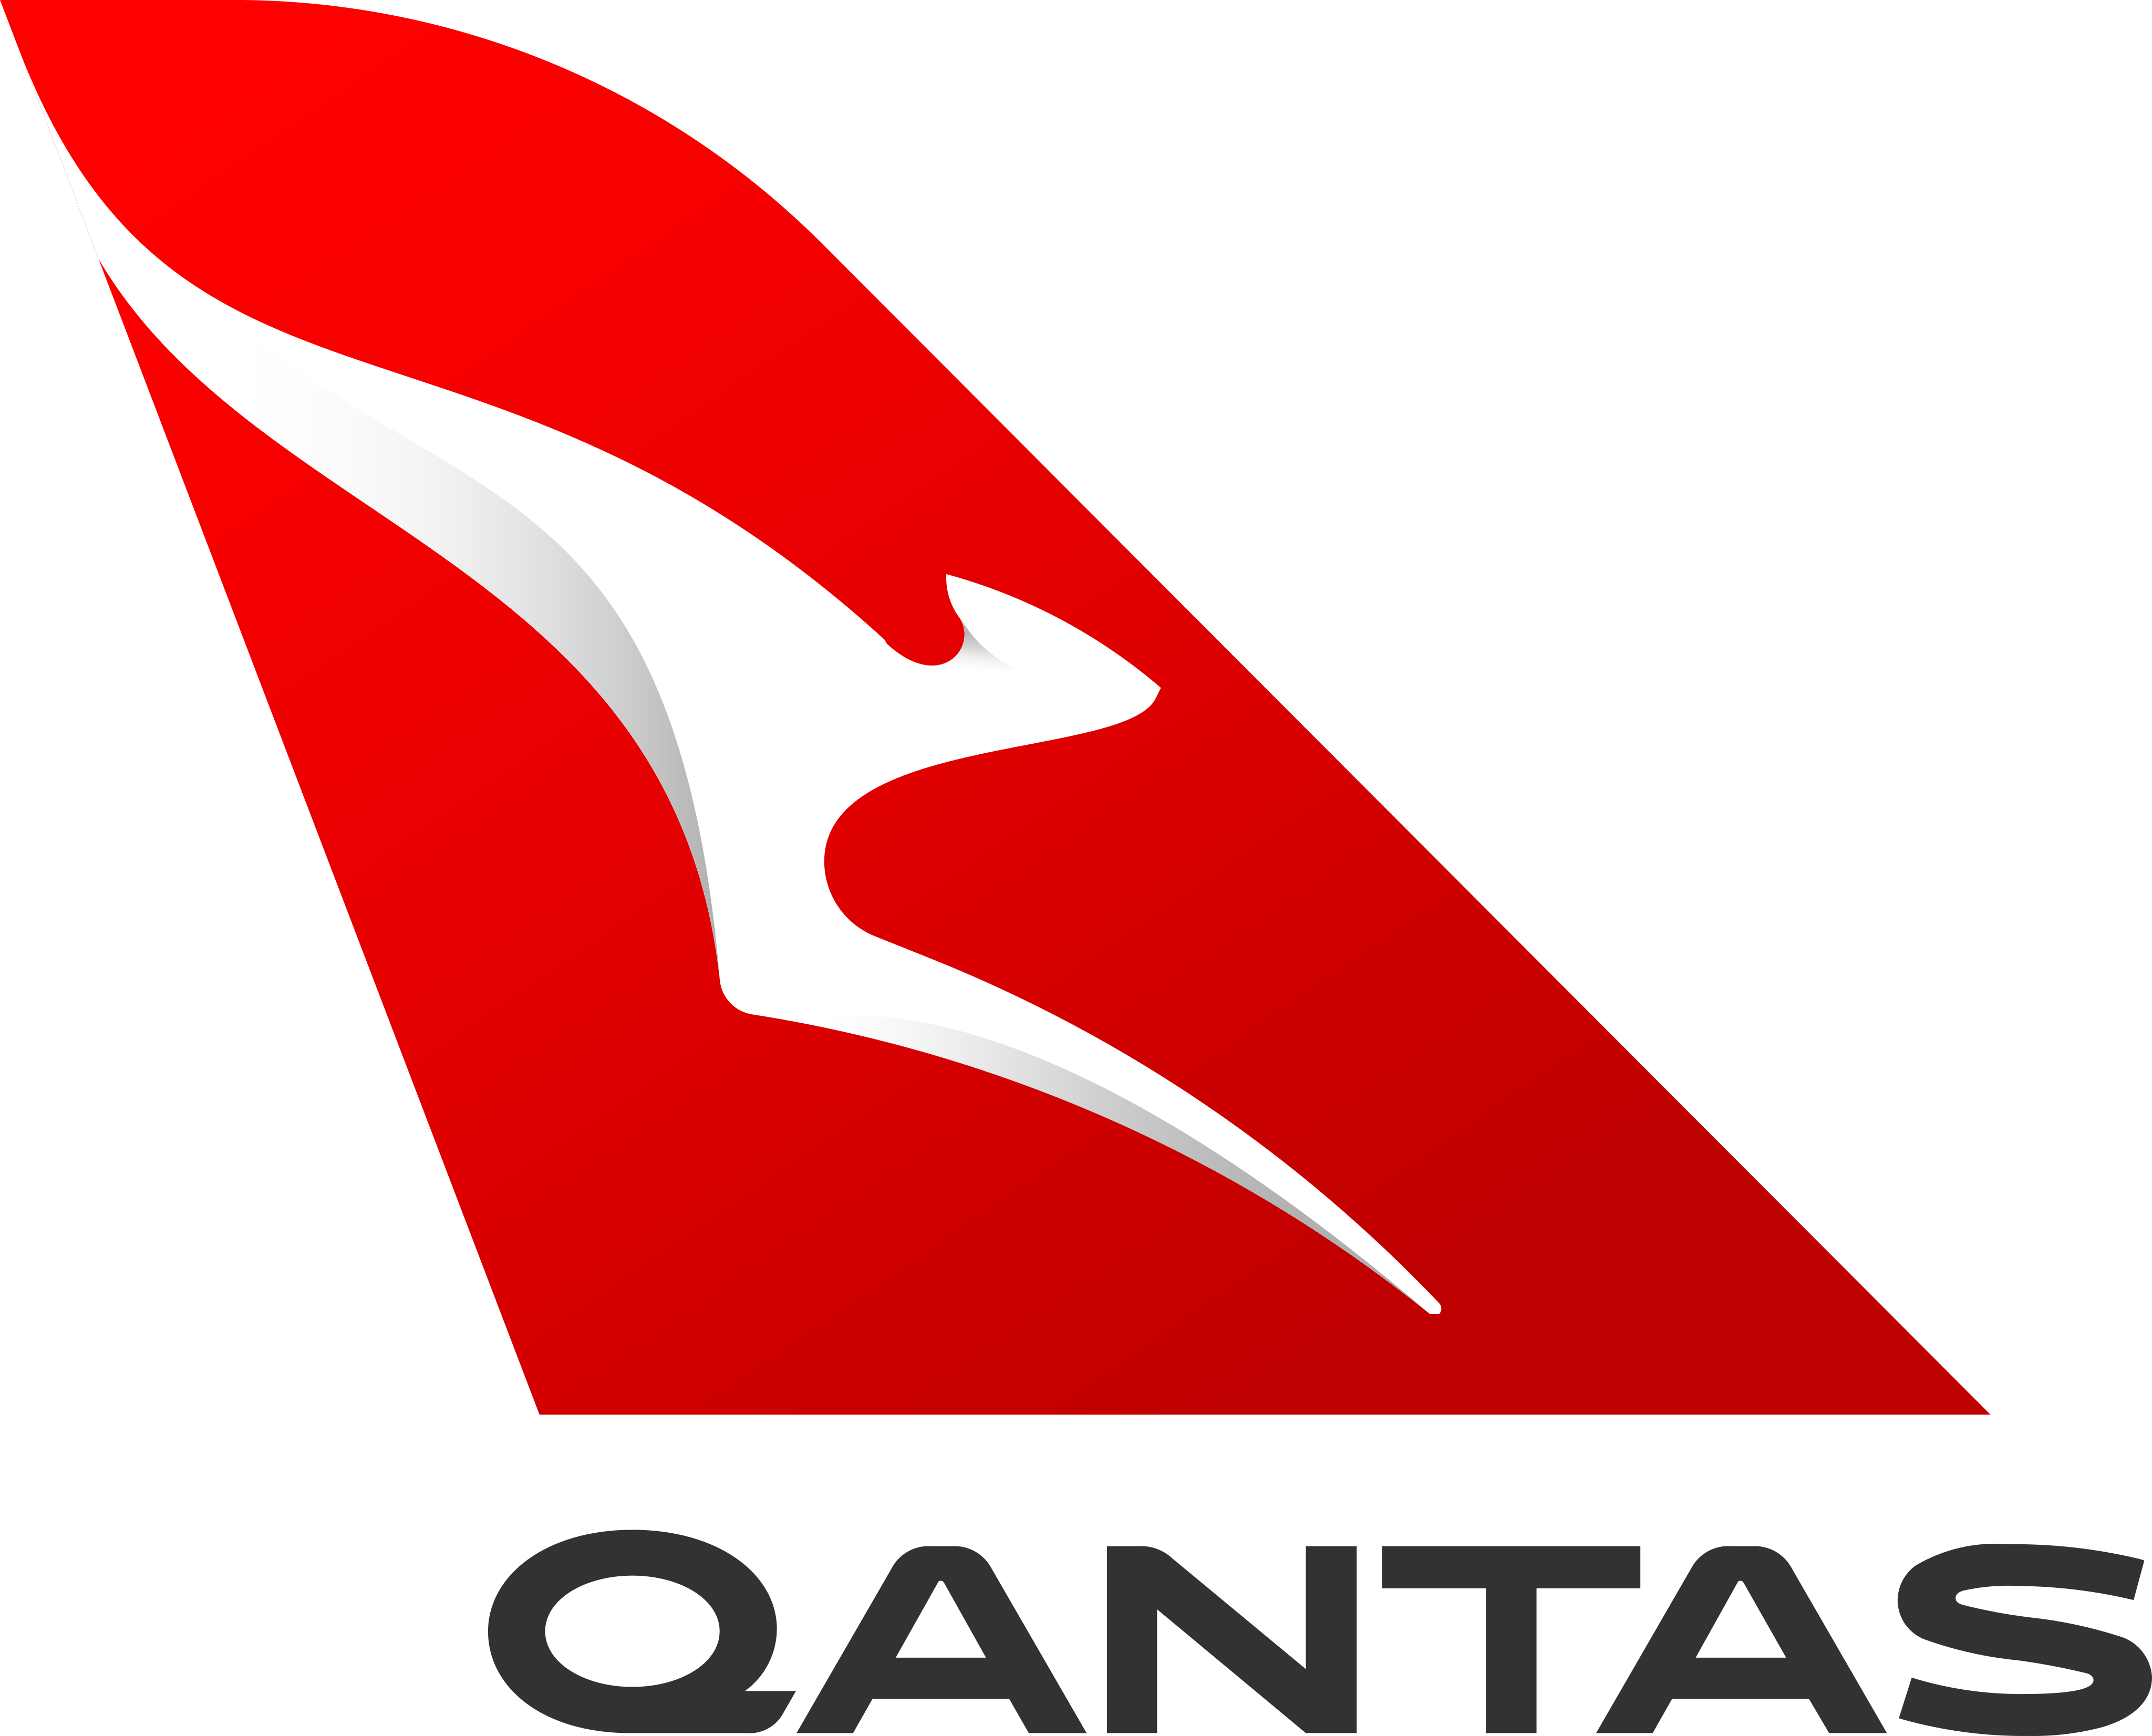 qantas airways logo 5 - Qantas Airways Logo